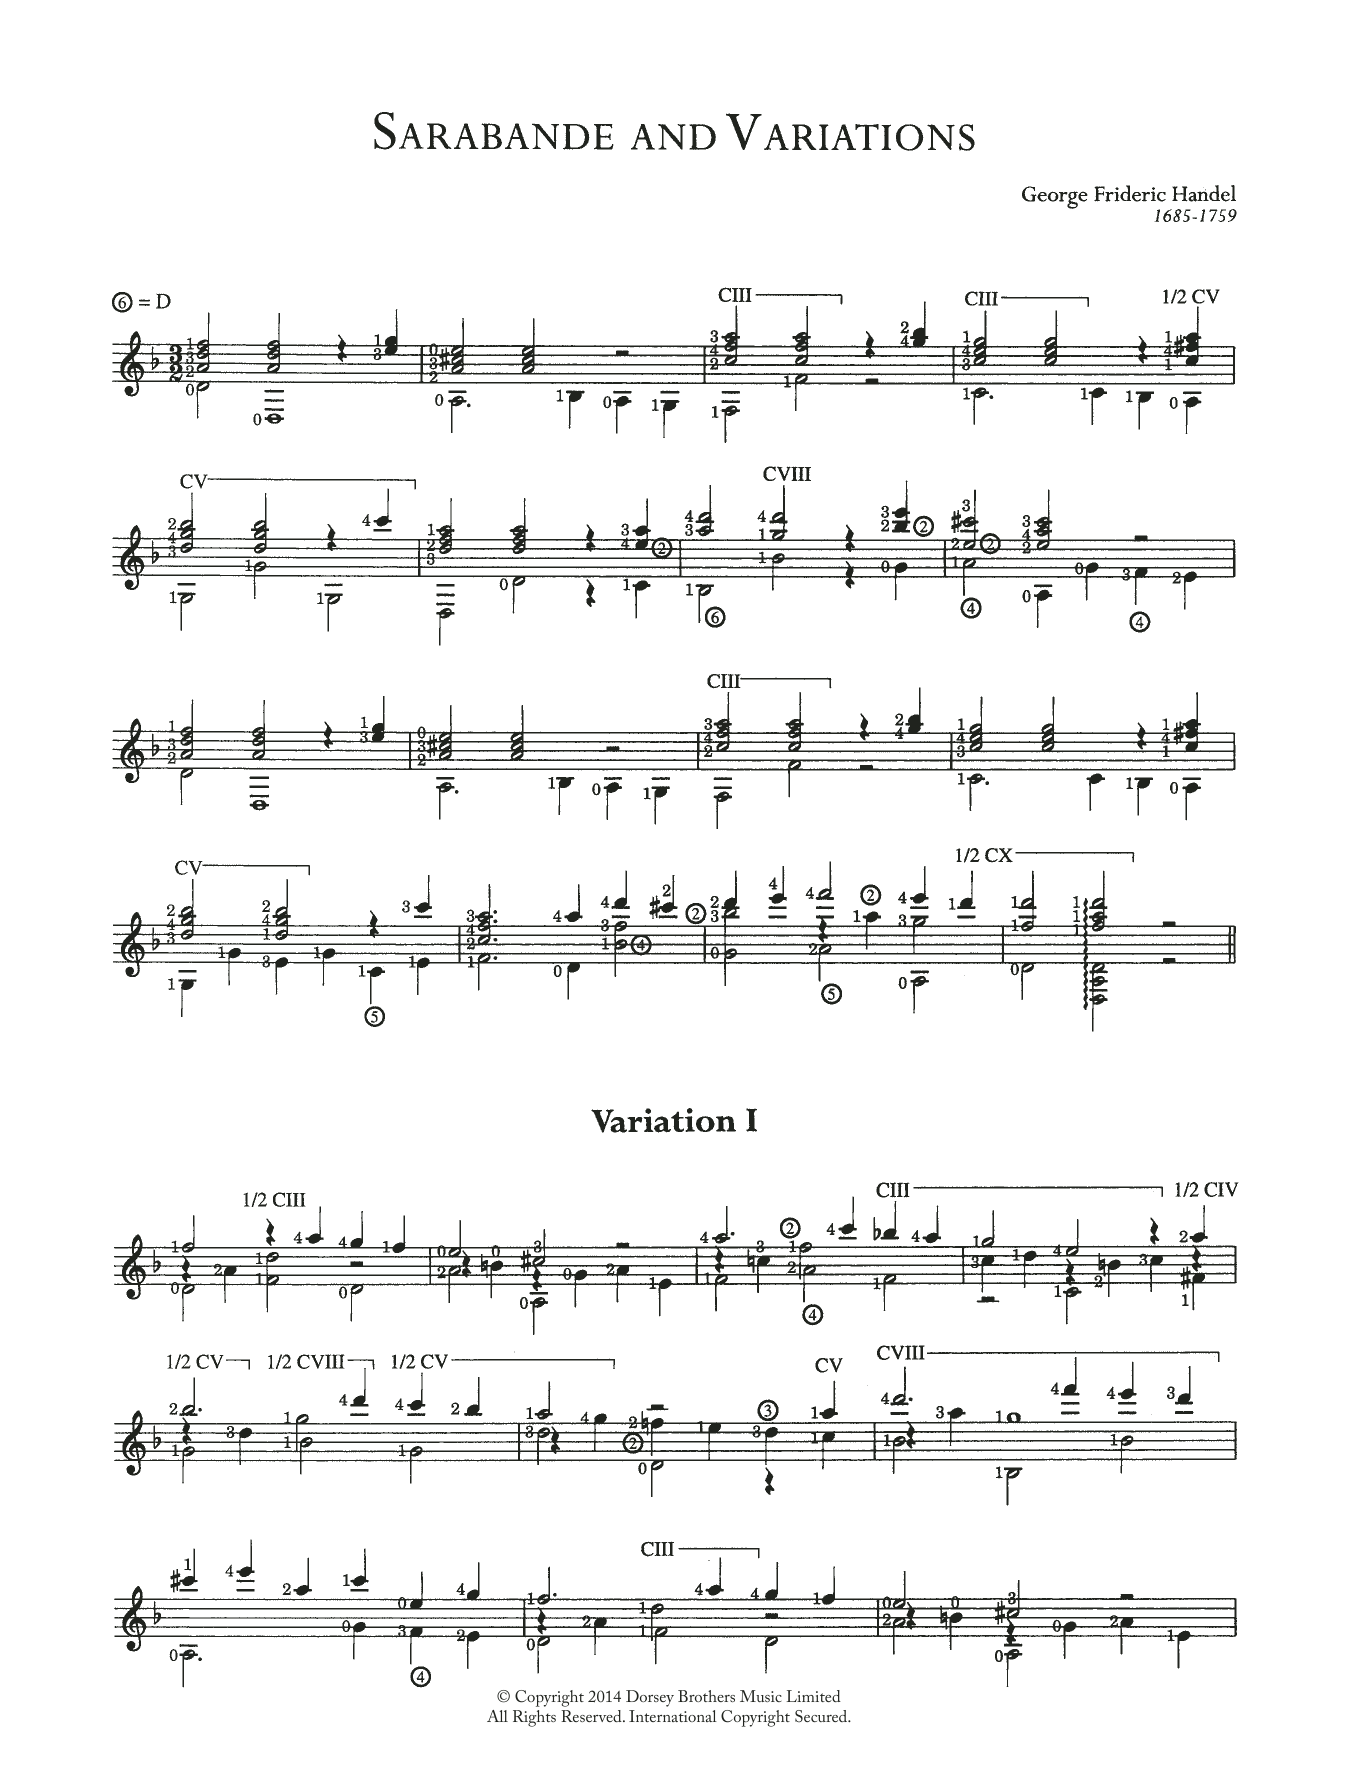 George Frideric Handel Sarabande And Variations Sheet Music Notes & Chords for Guitar - Download or Print PDF